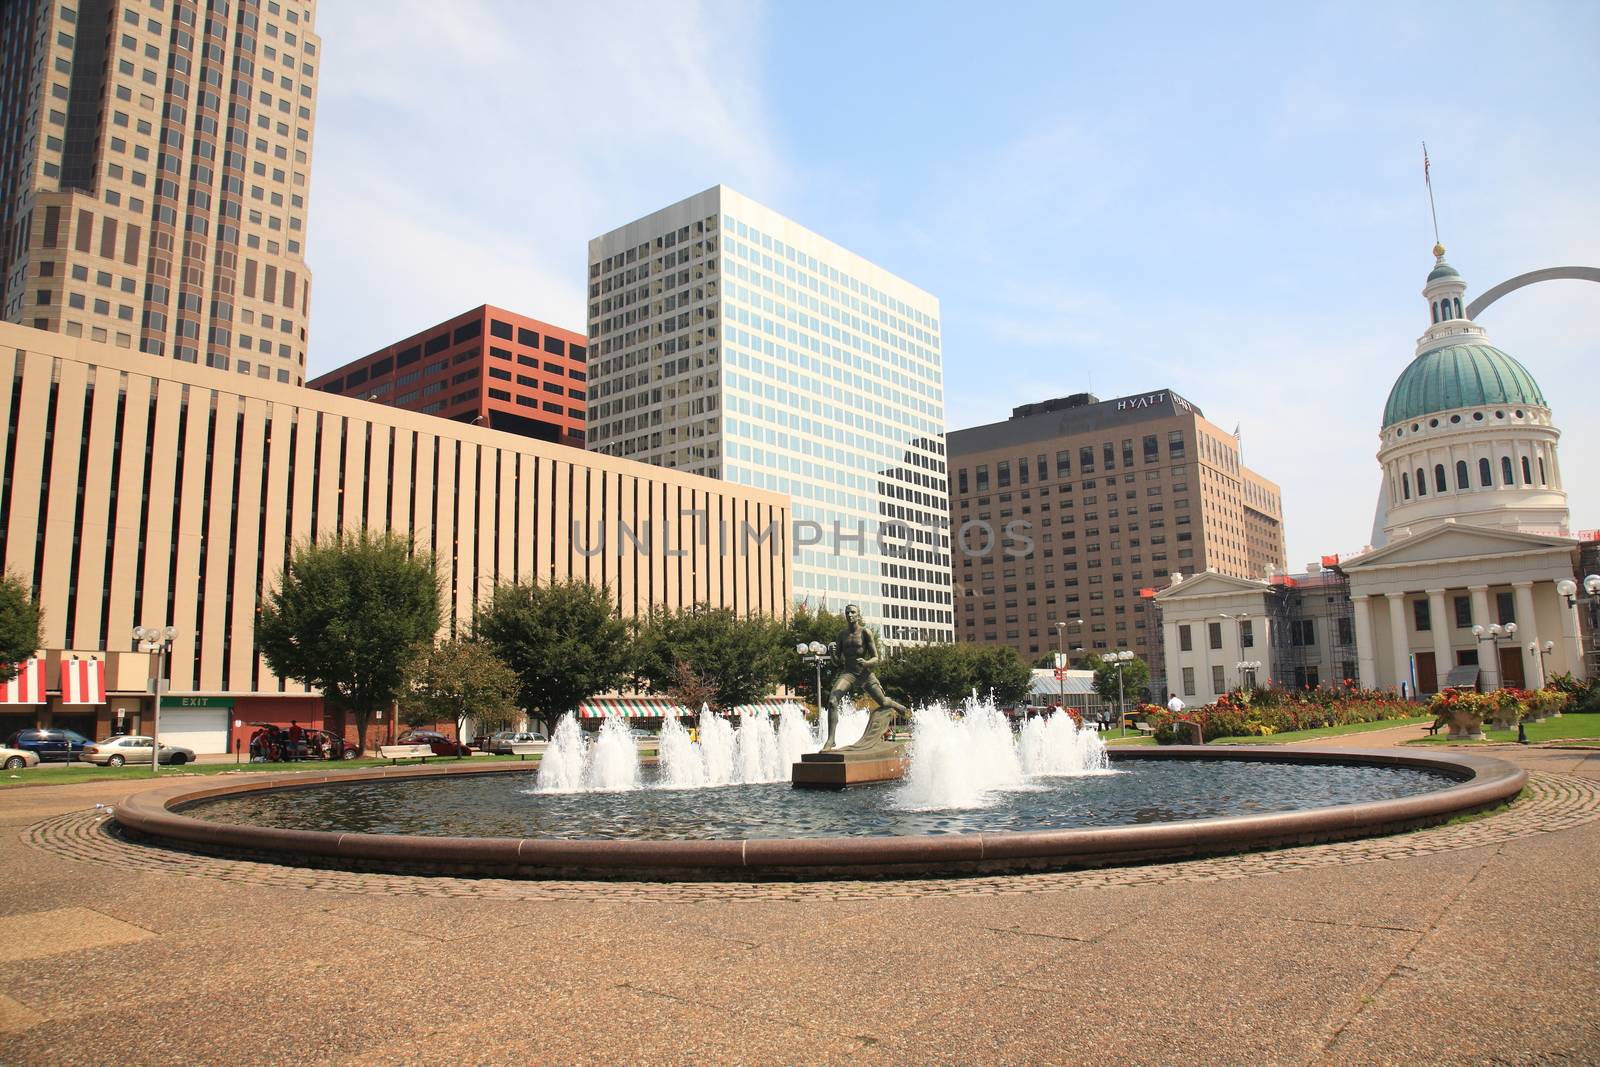 St. Louis - Kiener Plaza by Ffooter